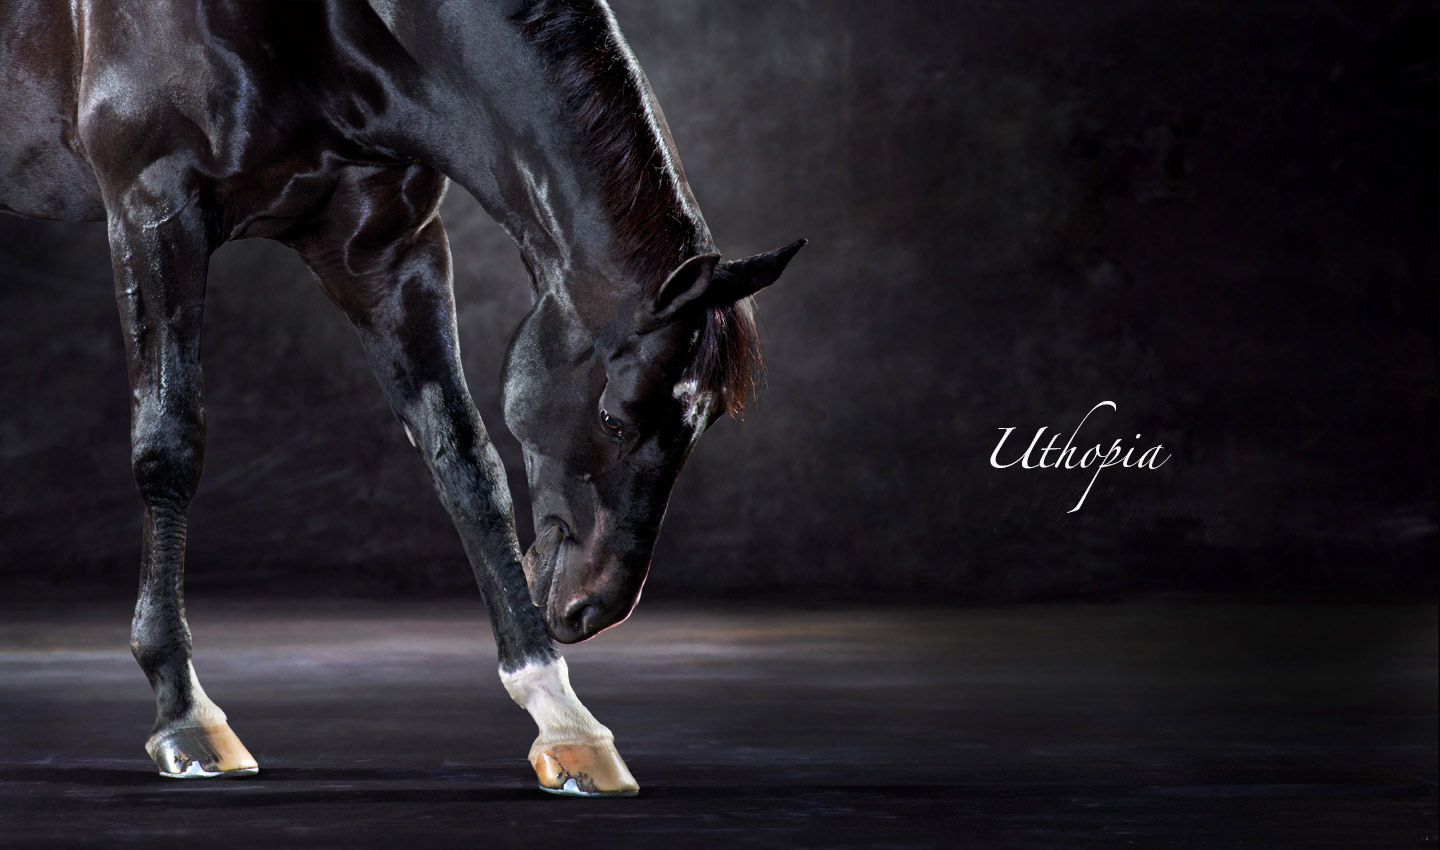 Uthopia_the_Bow-Olympic_Champion_Dressage-black-horse-stallion-equestrian-portrait-photography-photographer_Lindsay_Robertson